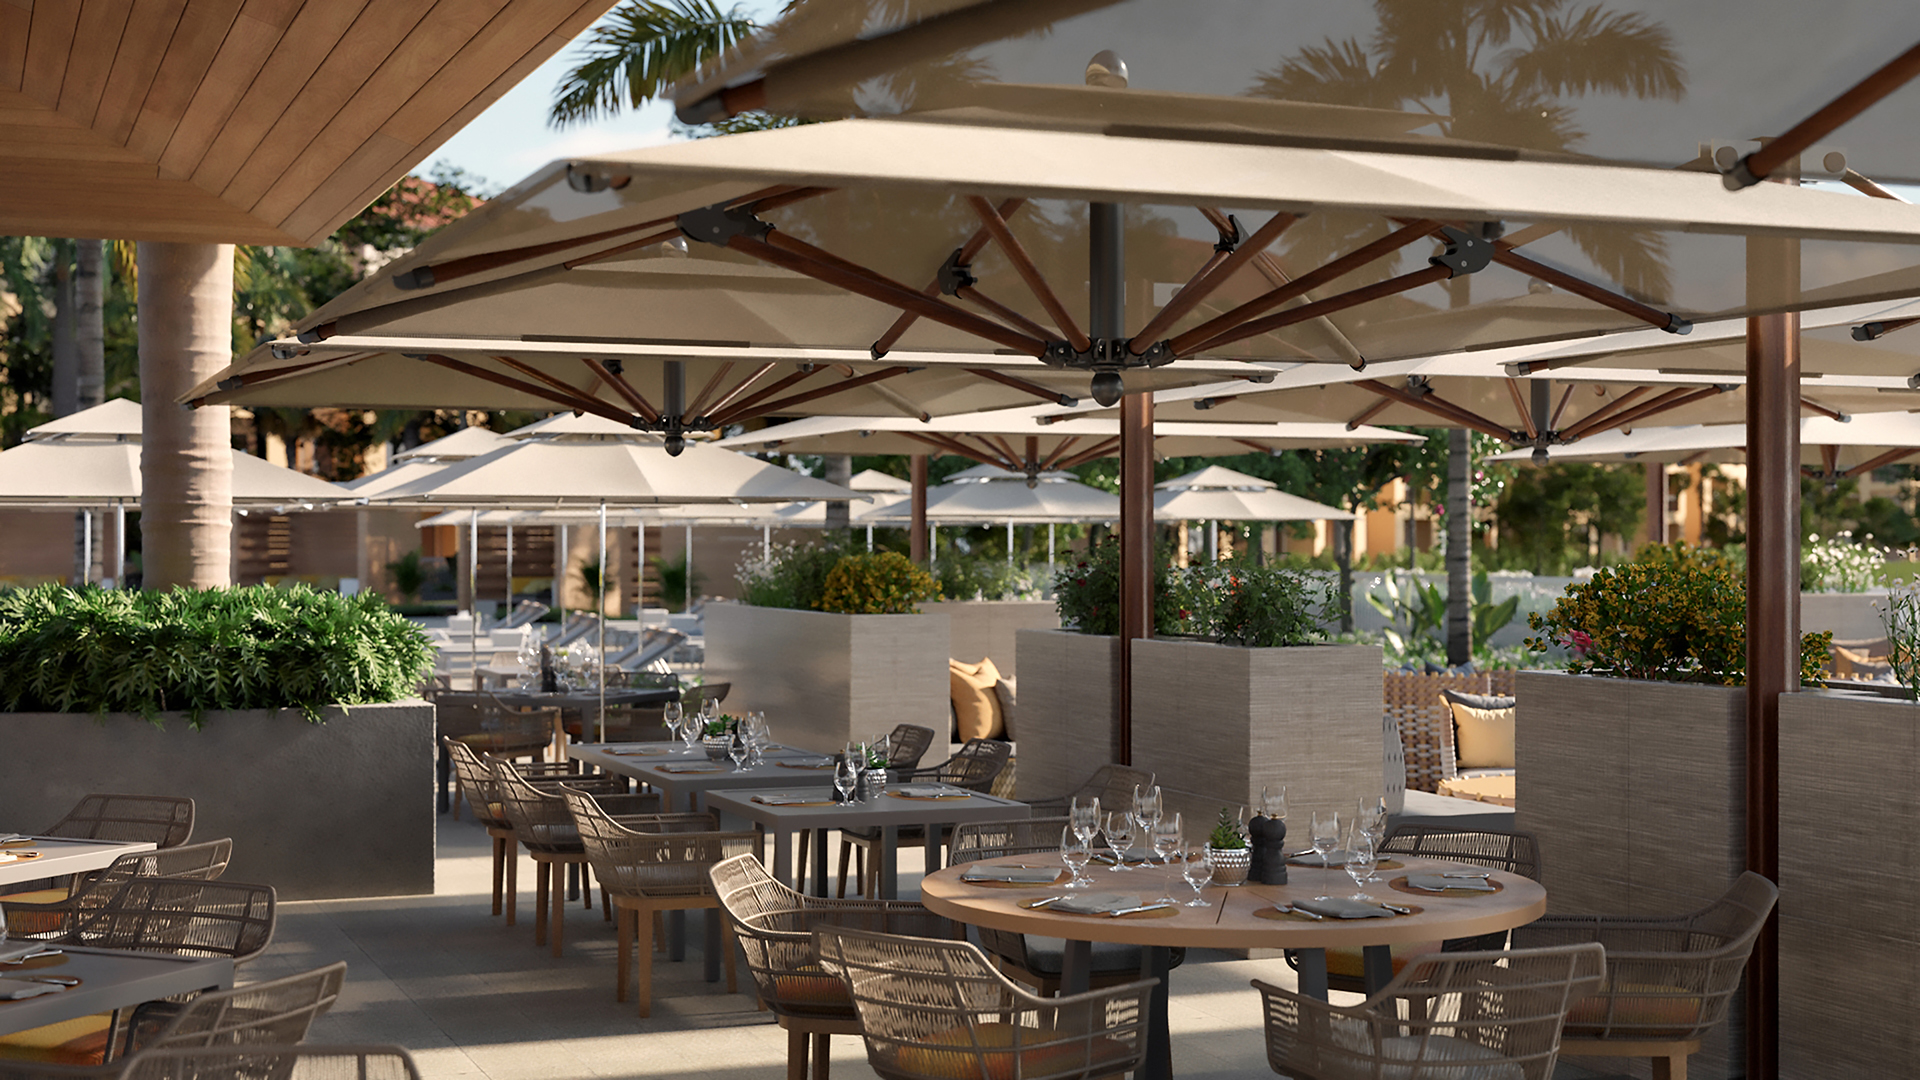 Vega Digital Awards Winner - New Additions at The Ritz-Carlton Golf Resort, Naples